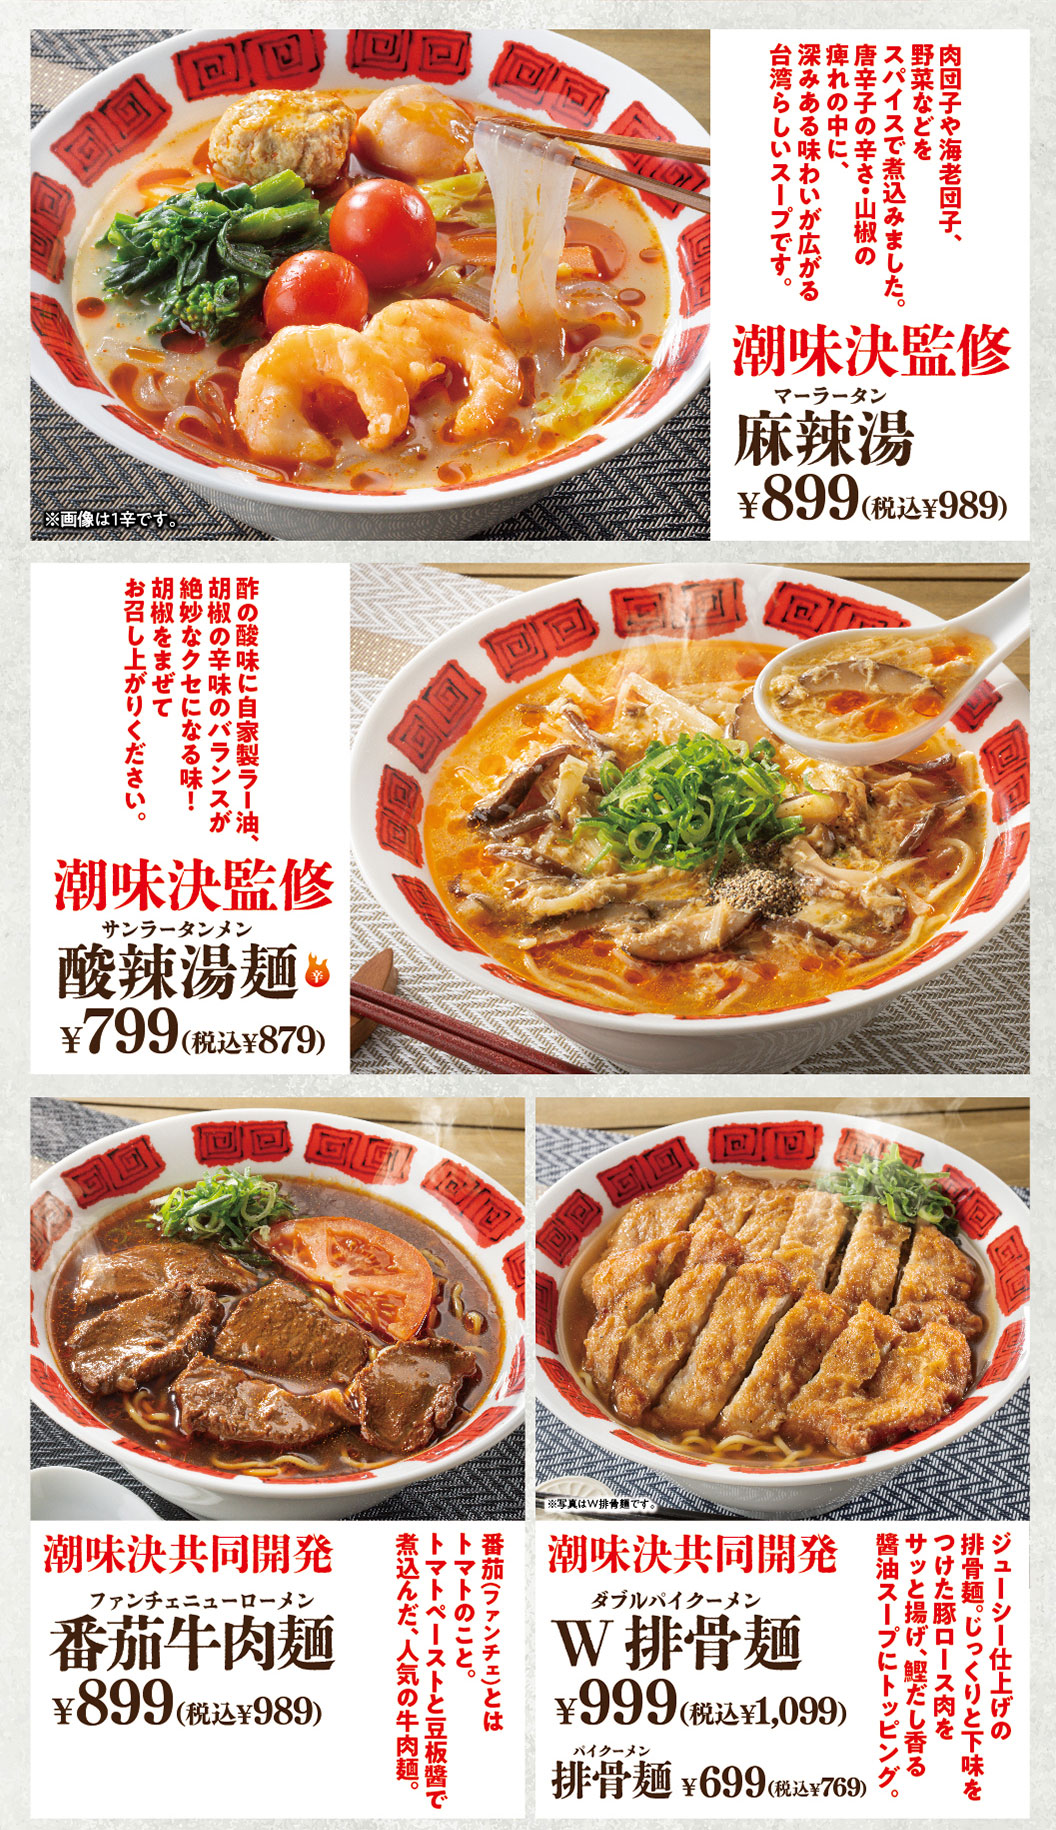 Supervised by Shiomi Kei Mala Soup Hot and Sour Soup Noodles Eggplant Beef Noodles Skeletal Noodles